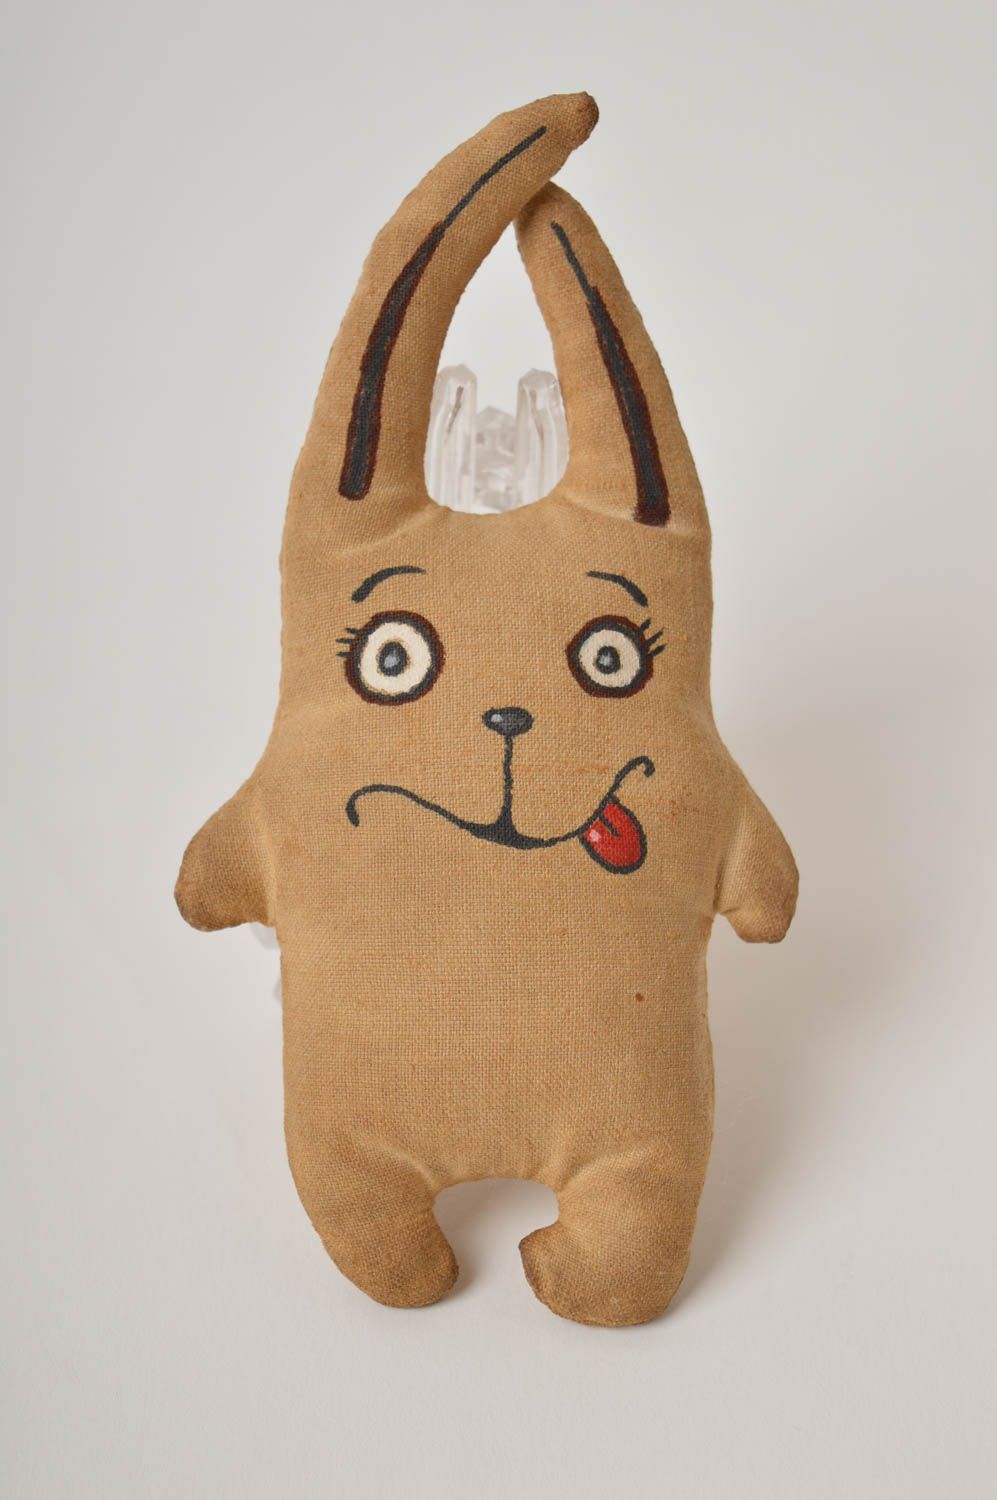 Handmade hare toy interesting cute home decor stylish designer accessories photo 2